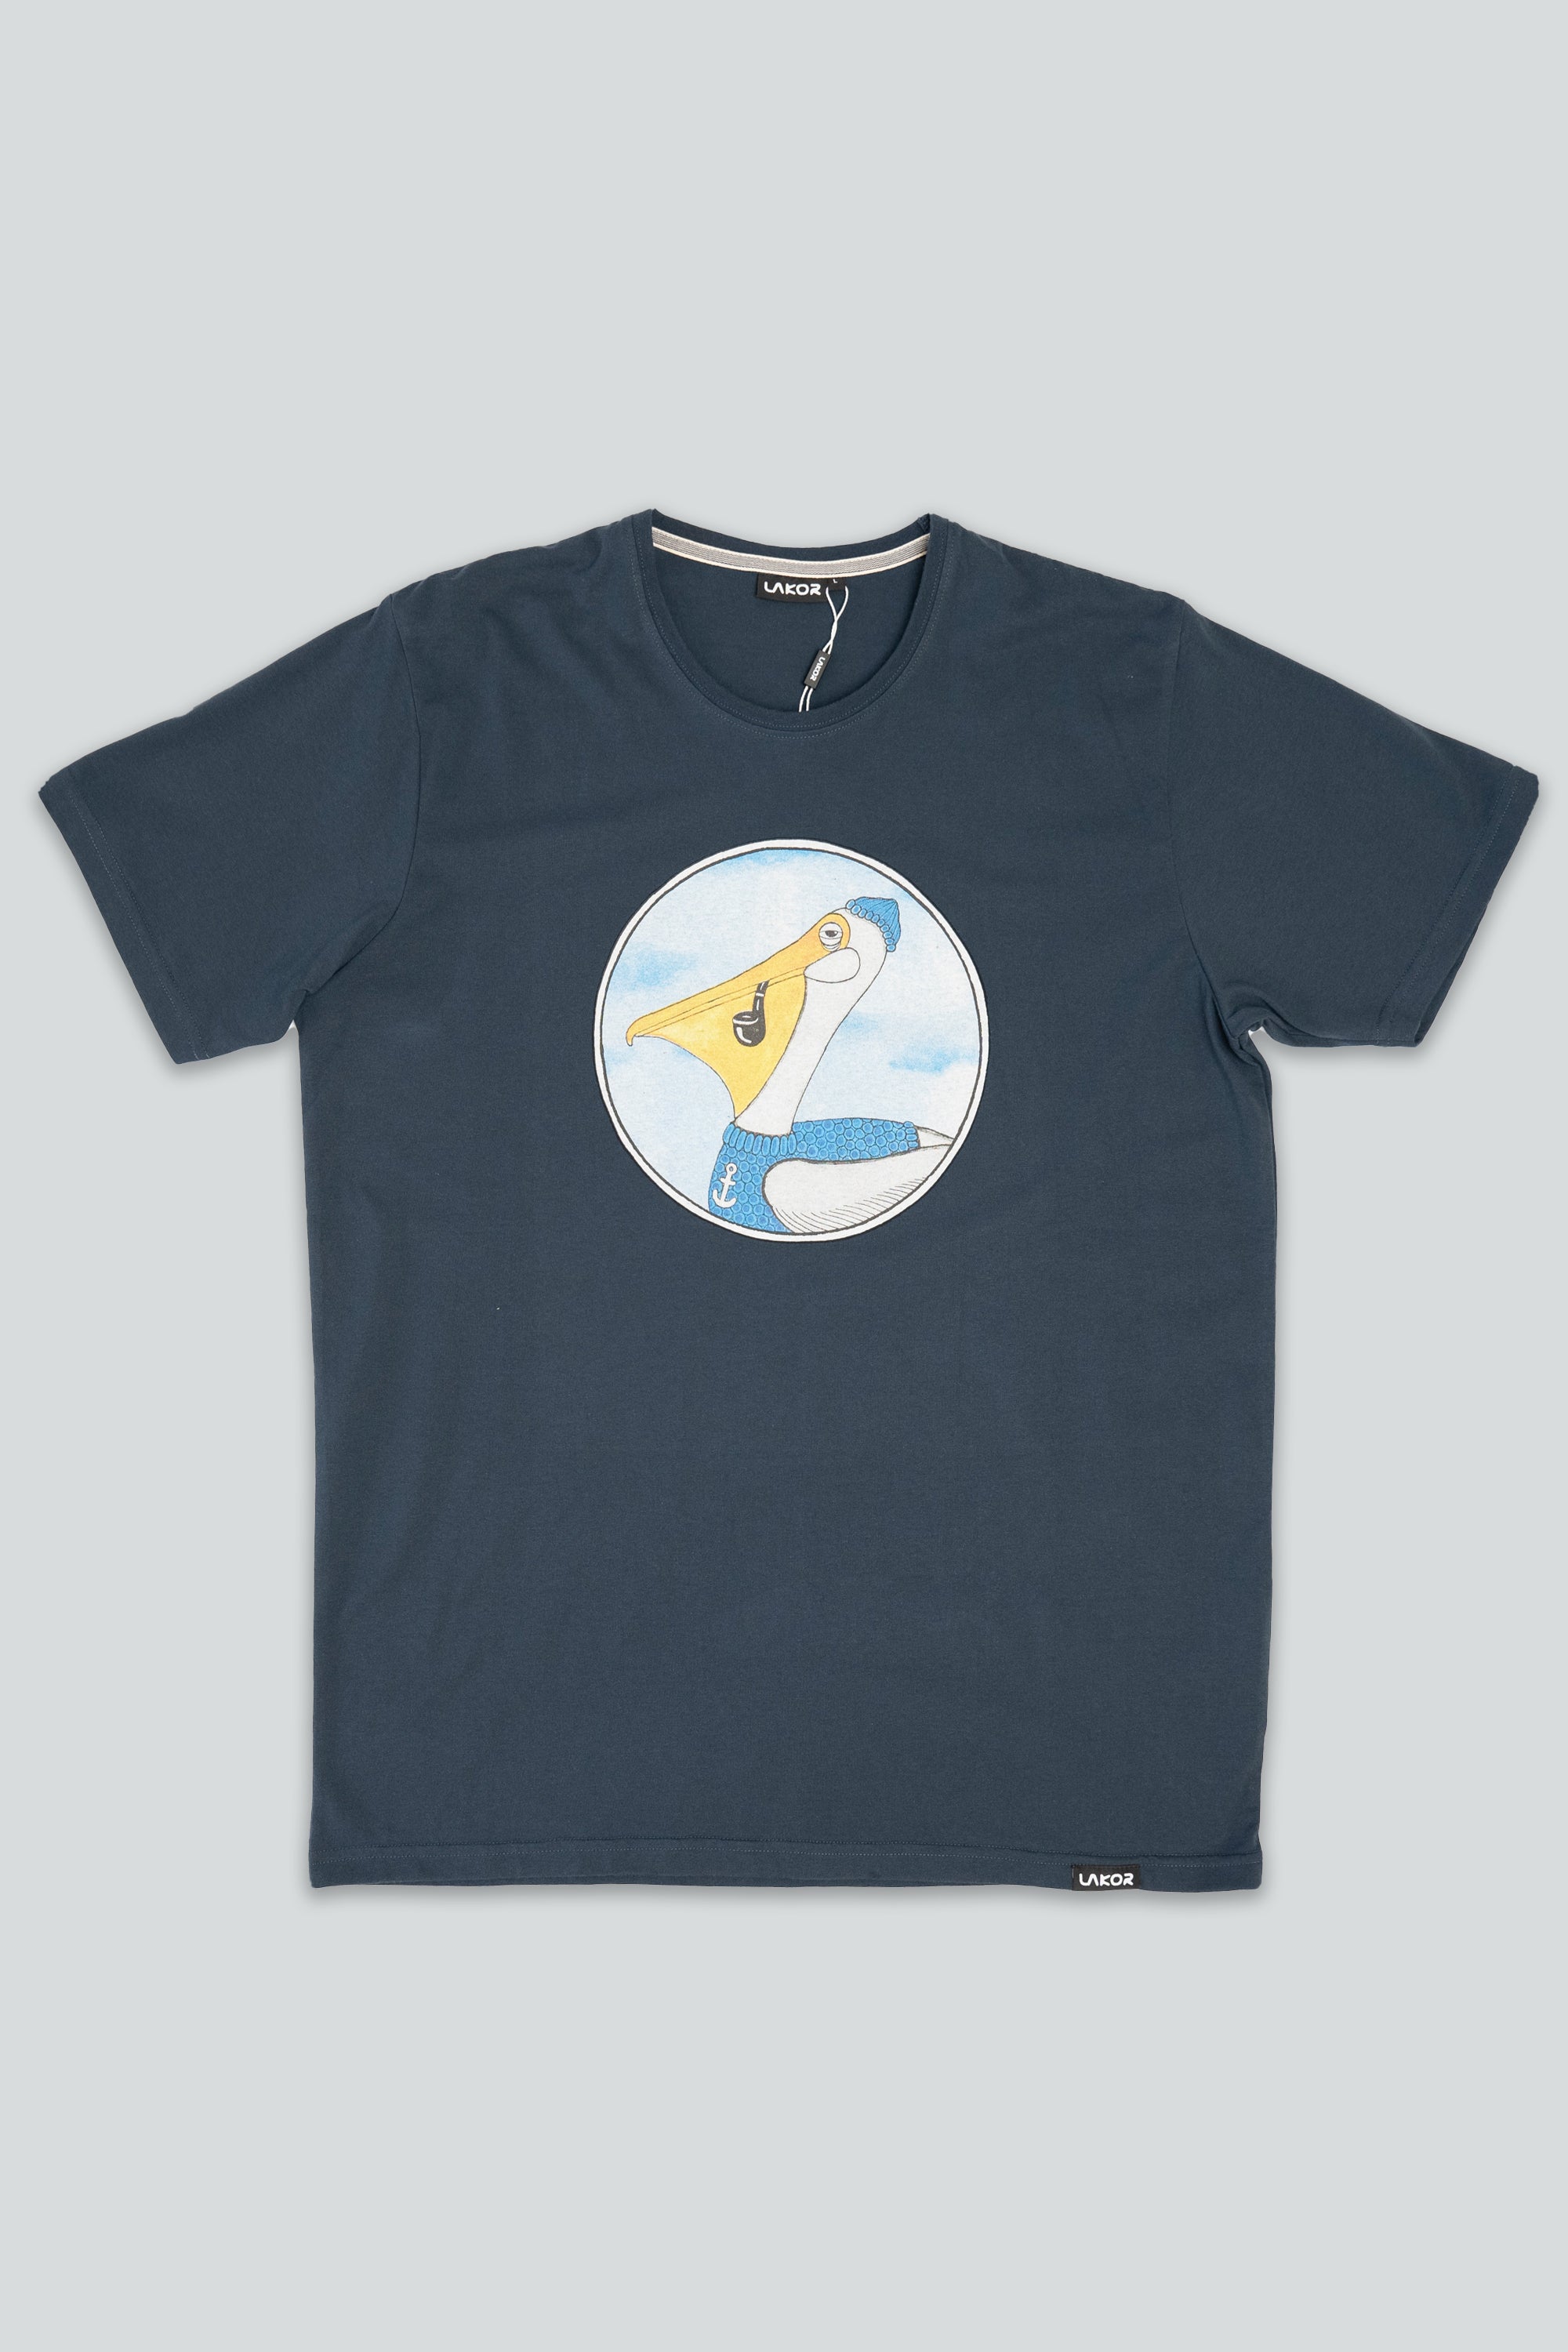 Pipe Pelican T-shirt (Navy)